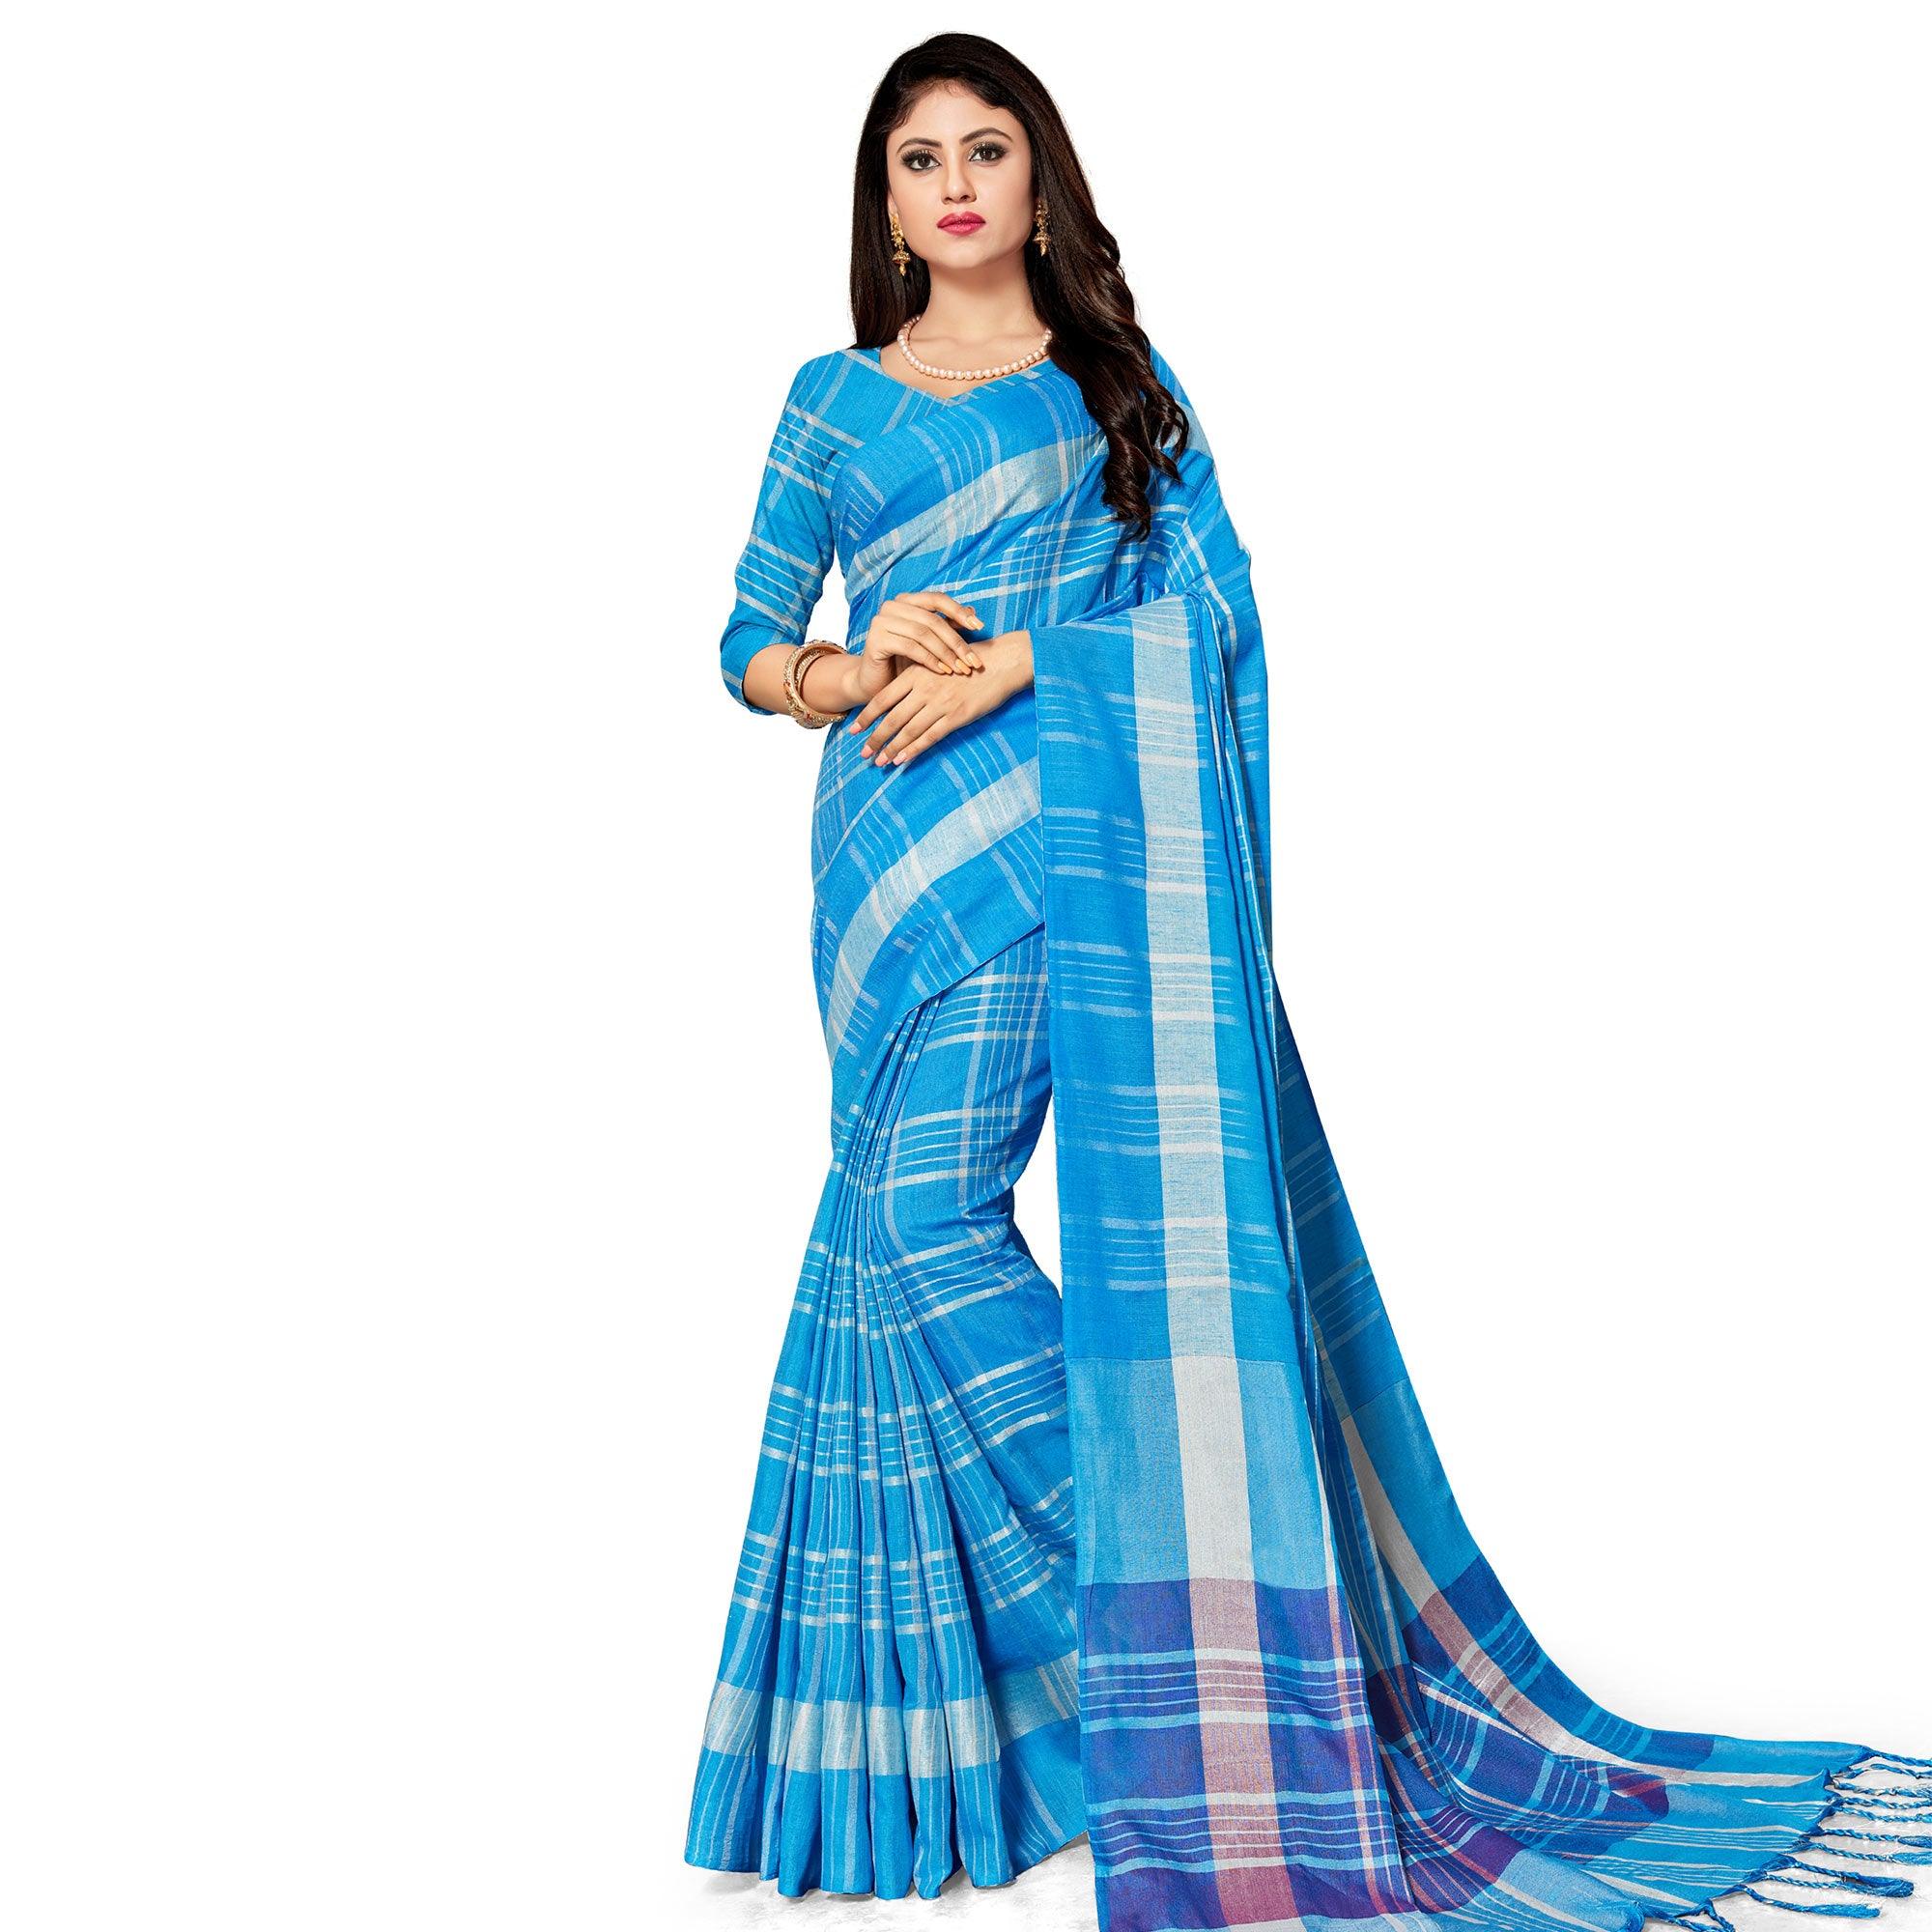 Prominent Blue Colored Fesive Wear Stripe Print Cotton Silk Saree With Tassels - Peachmode